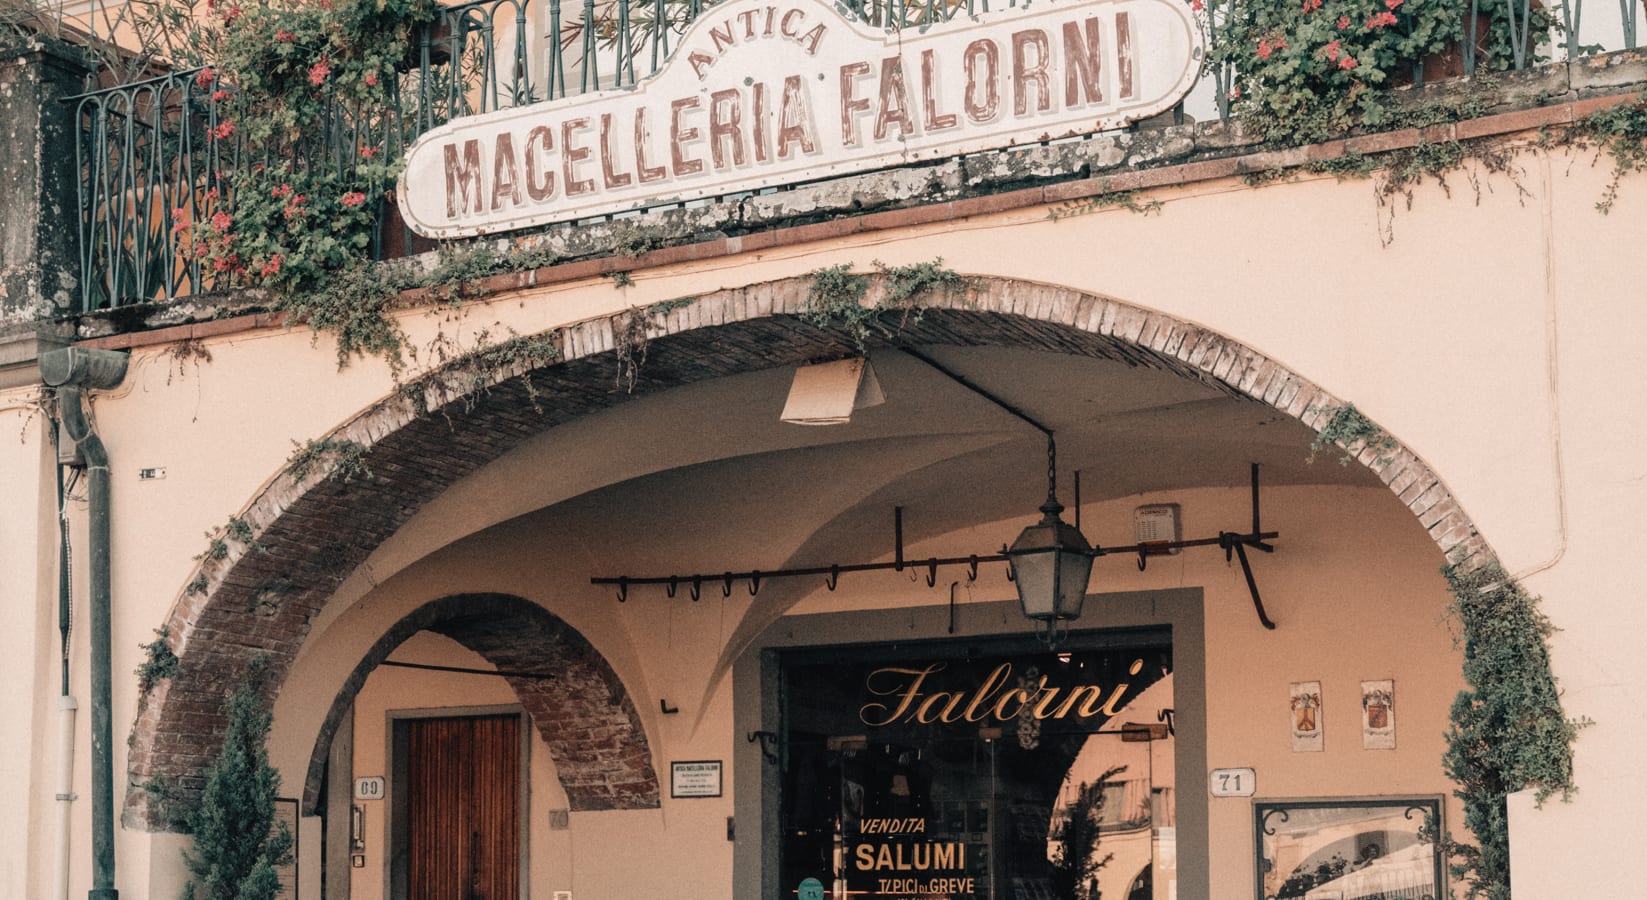 Macelleria Falorni - Greve in Chianti